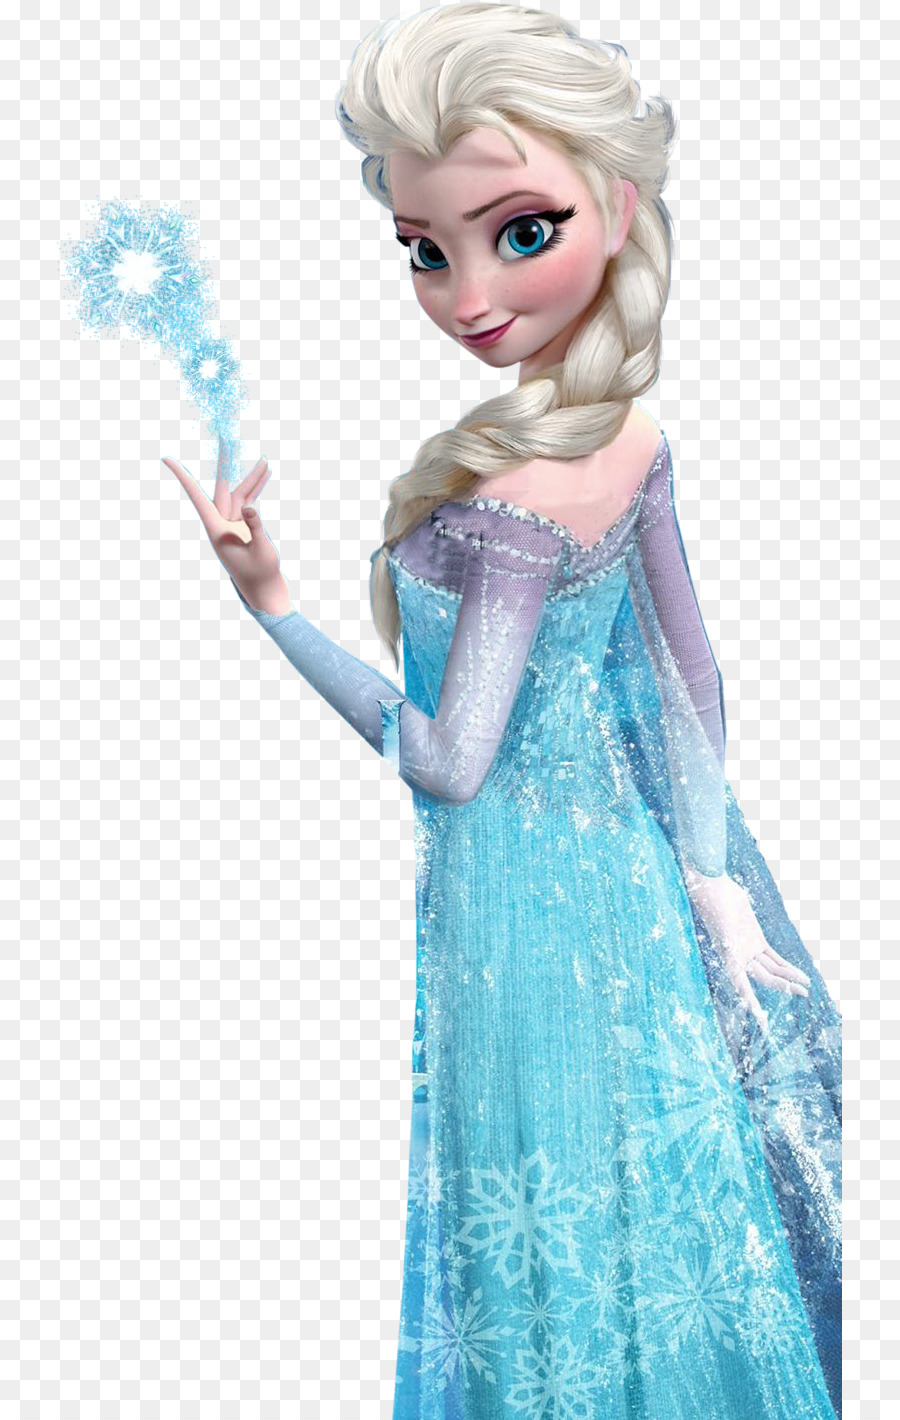 Elsa Frozentransparent png image & clipart free download.